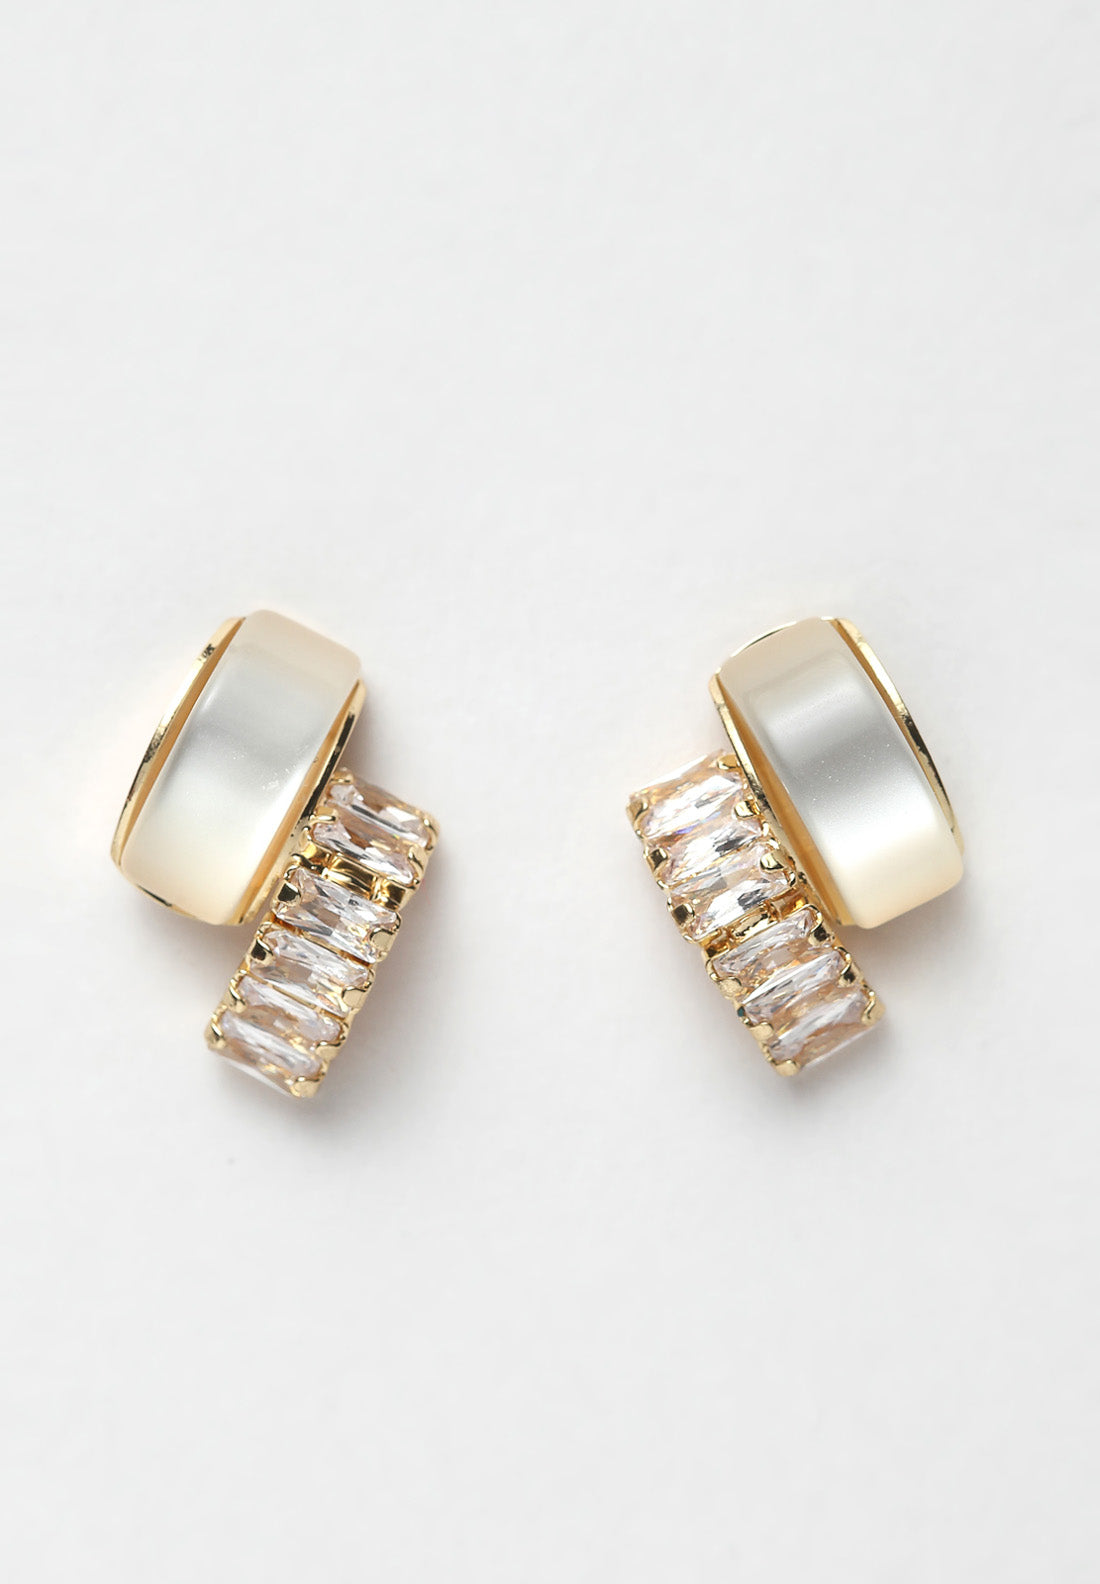 Avant-Garde Paris Gold & White Crystal Stud Earrings